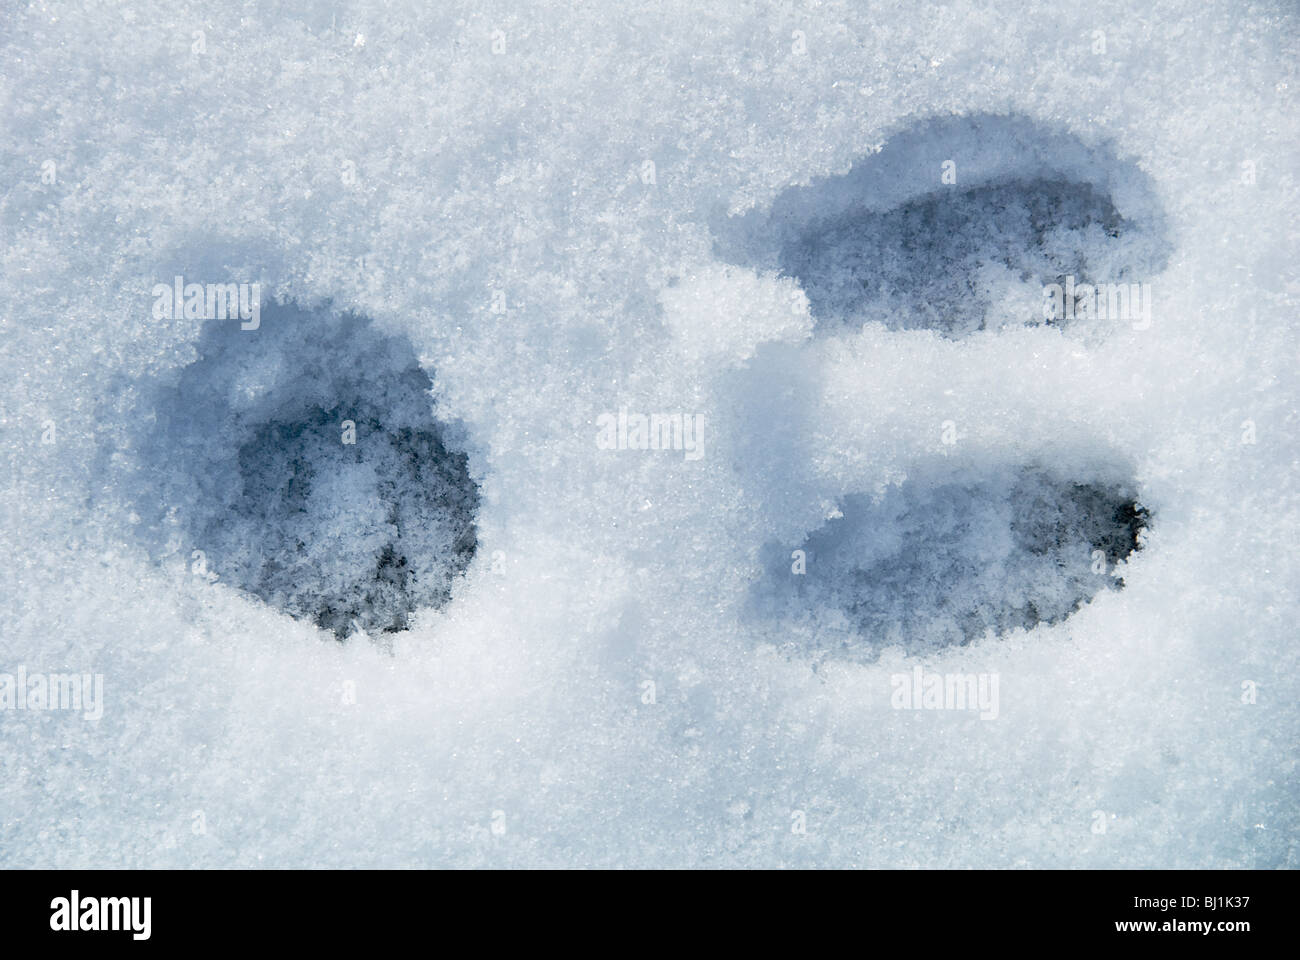 Rabbit tracks in the snow Stock Photo